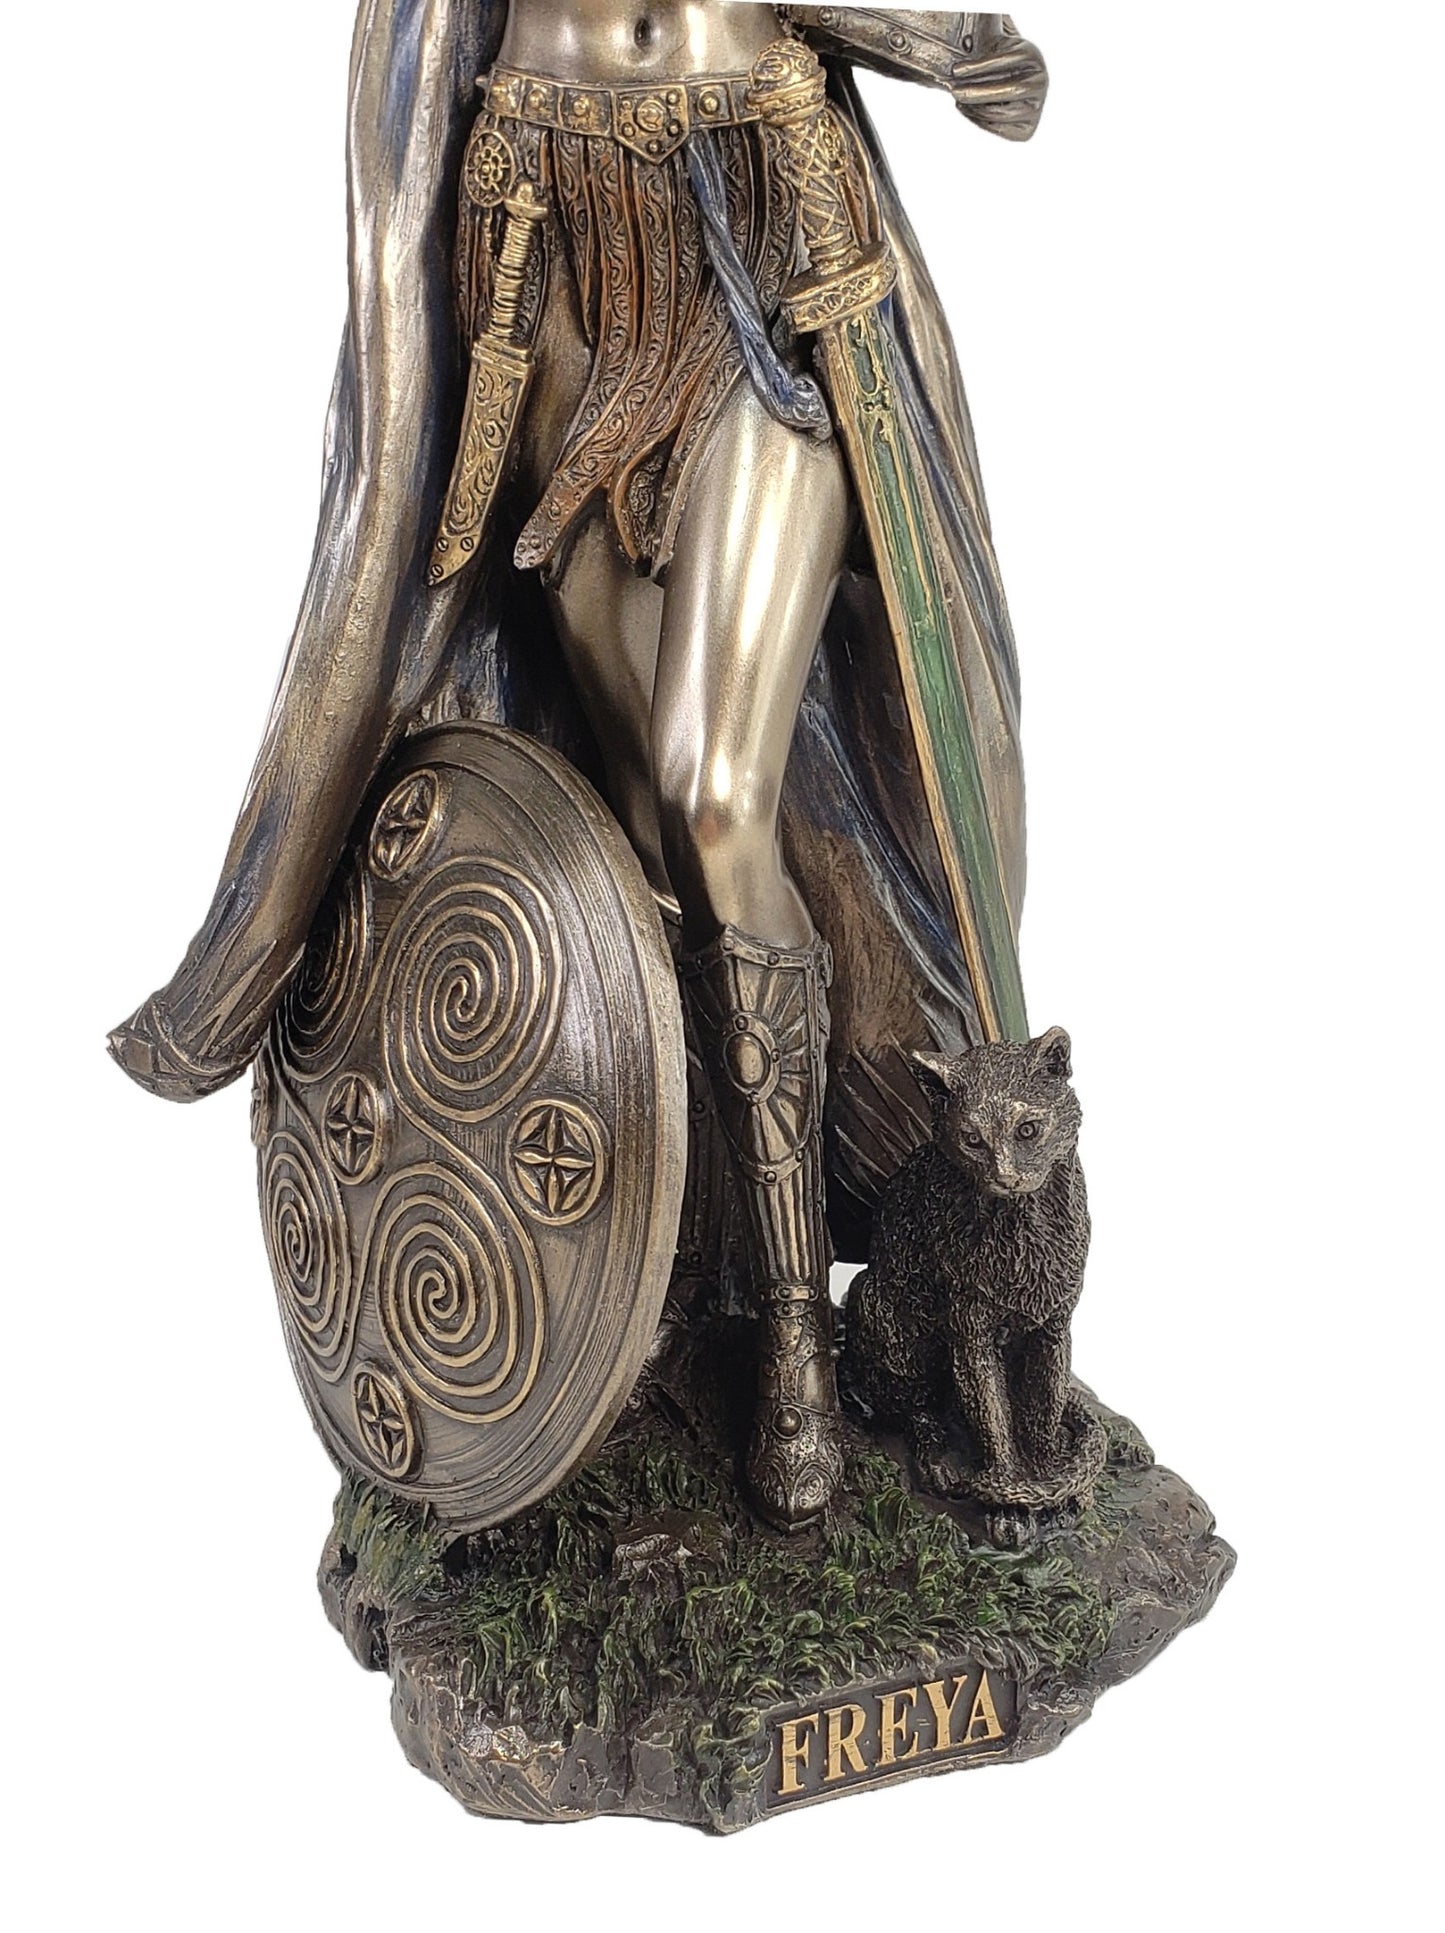 Viking Shieldmaiden Norse Mythology Statue Bronze Finish Shield Maiden –  hotproductsllc